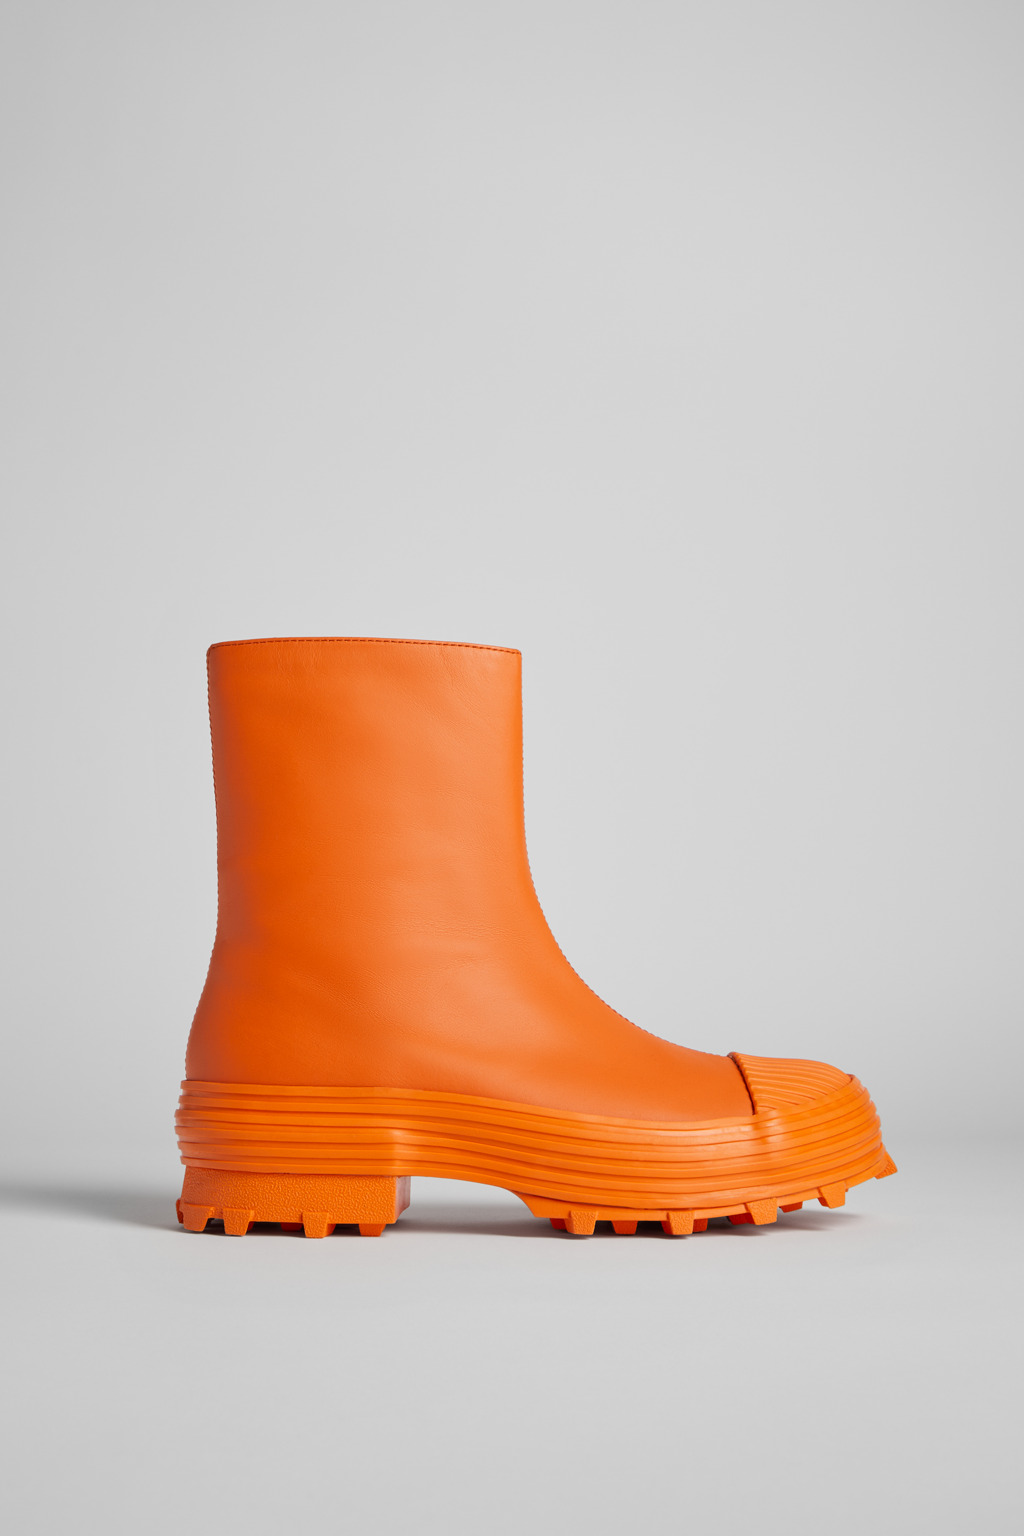 Tracktori Orange Boots for Women - Fall/Winter collection - Camper 